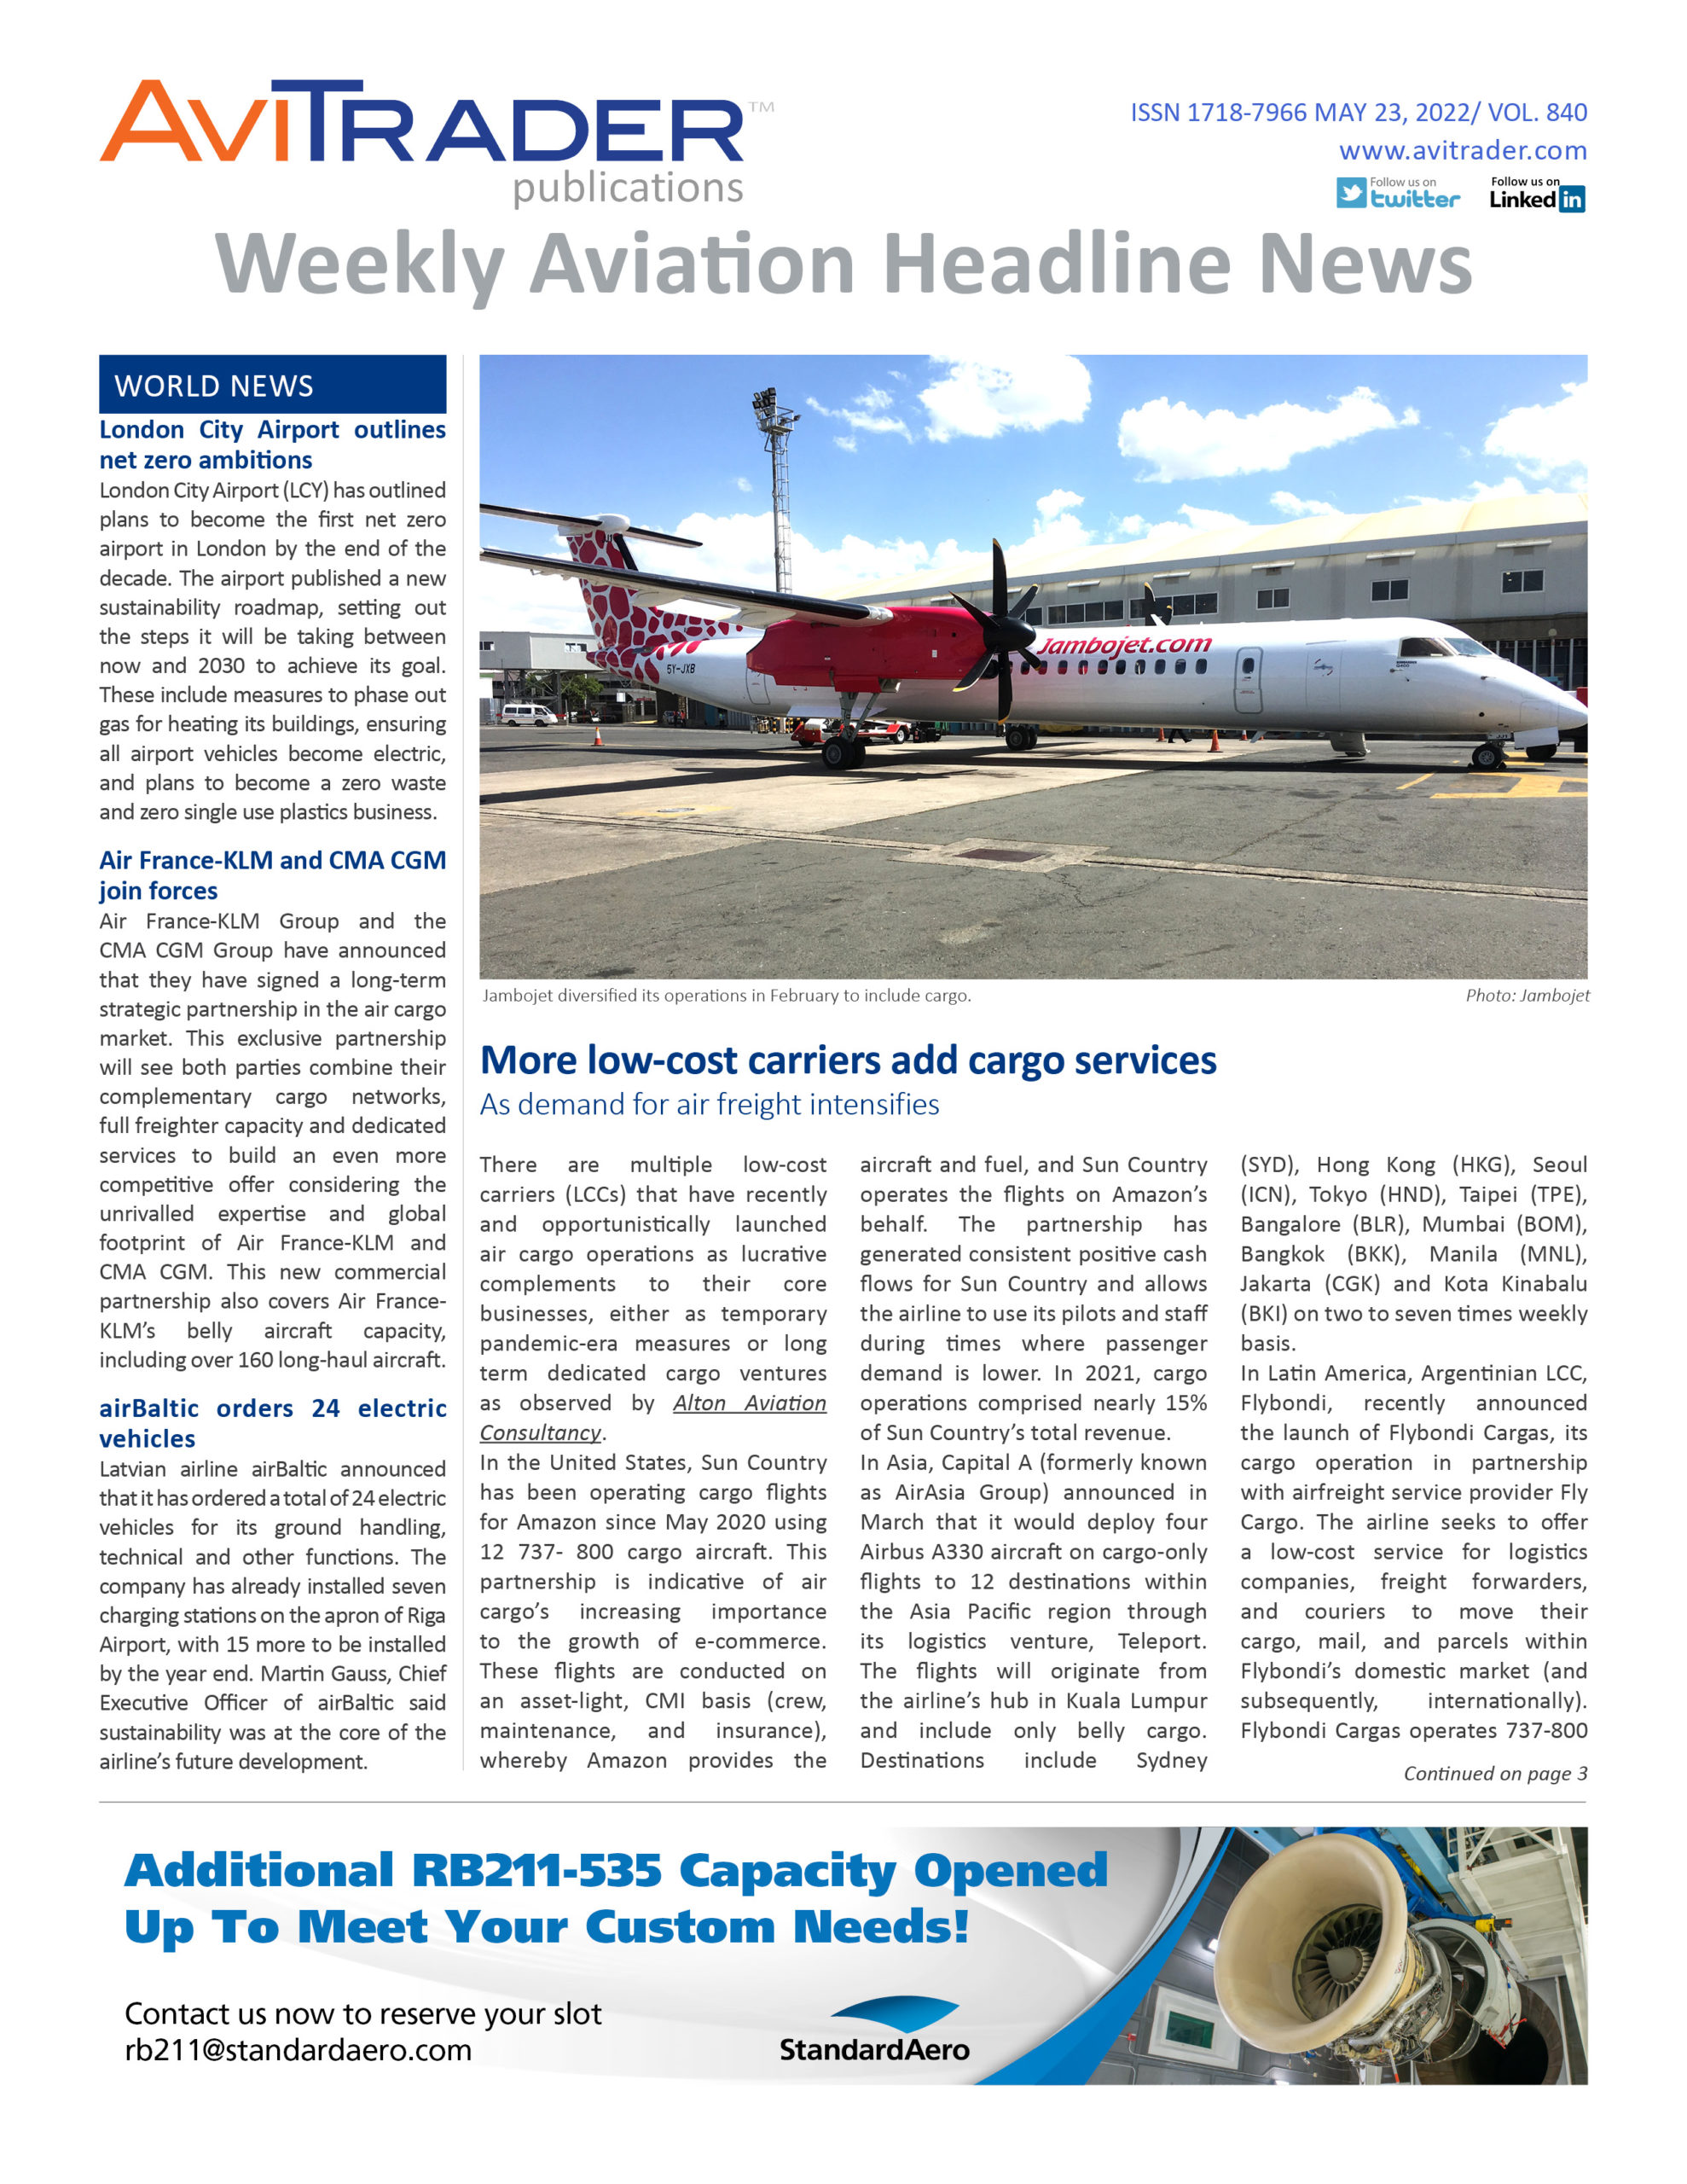 AviTrader_Weekly_Headline_News_Cover_2022-05-23